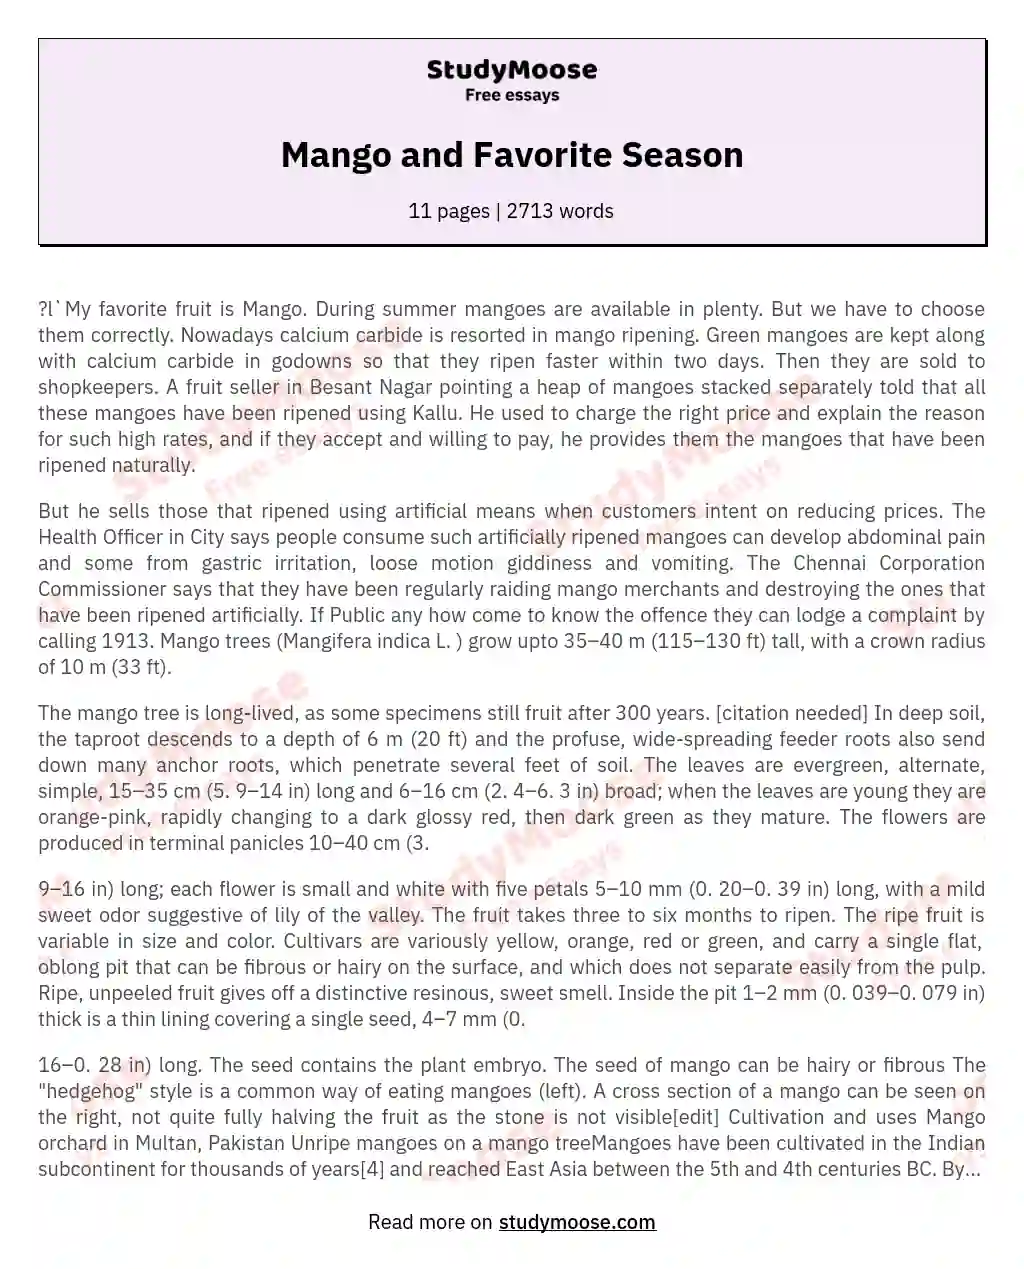 Mango and Favorite Season essay